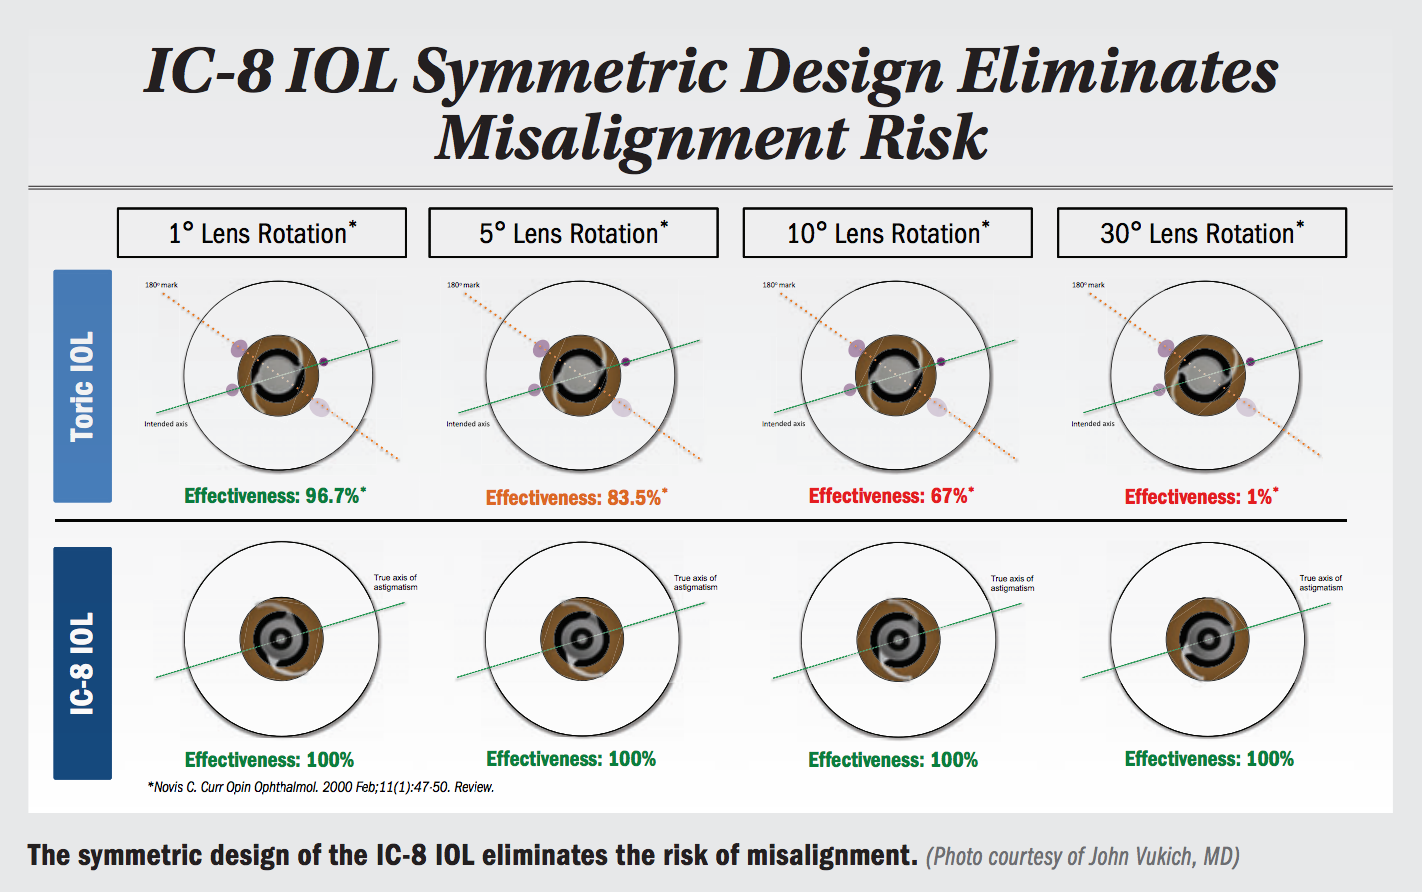 IC-8 IOL symmetric design eliminates misalignment risk